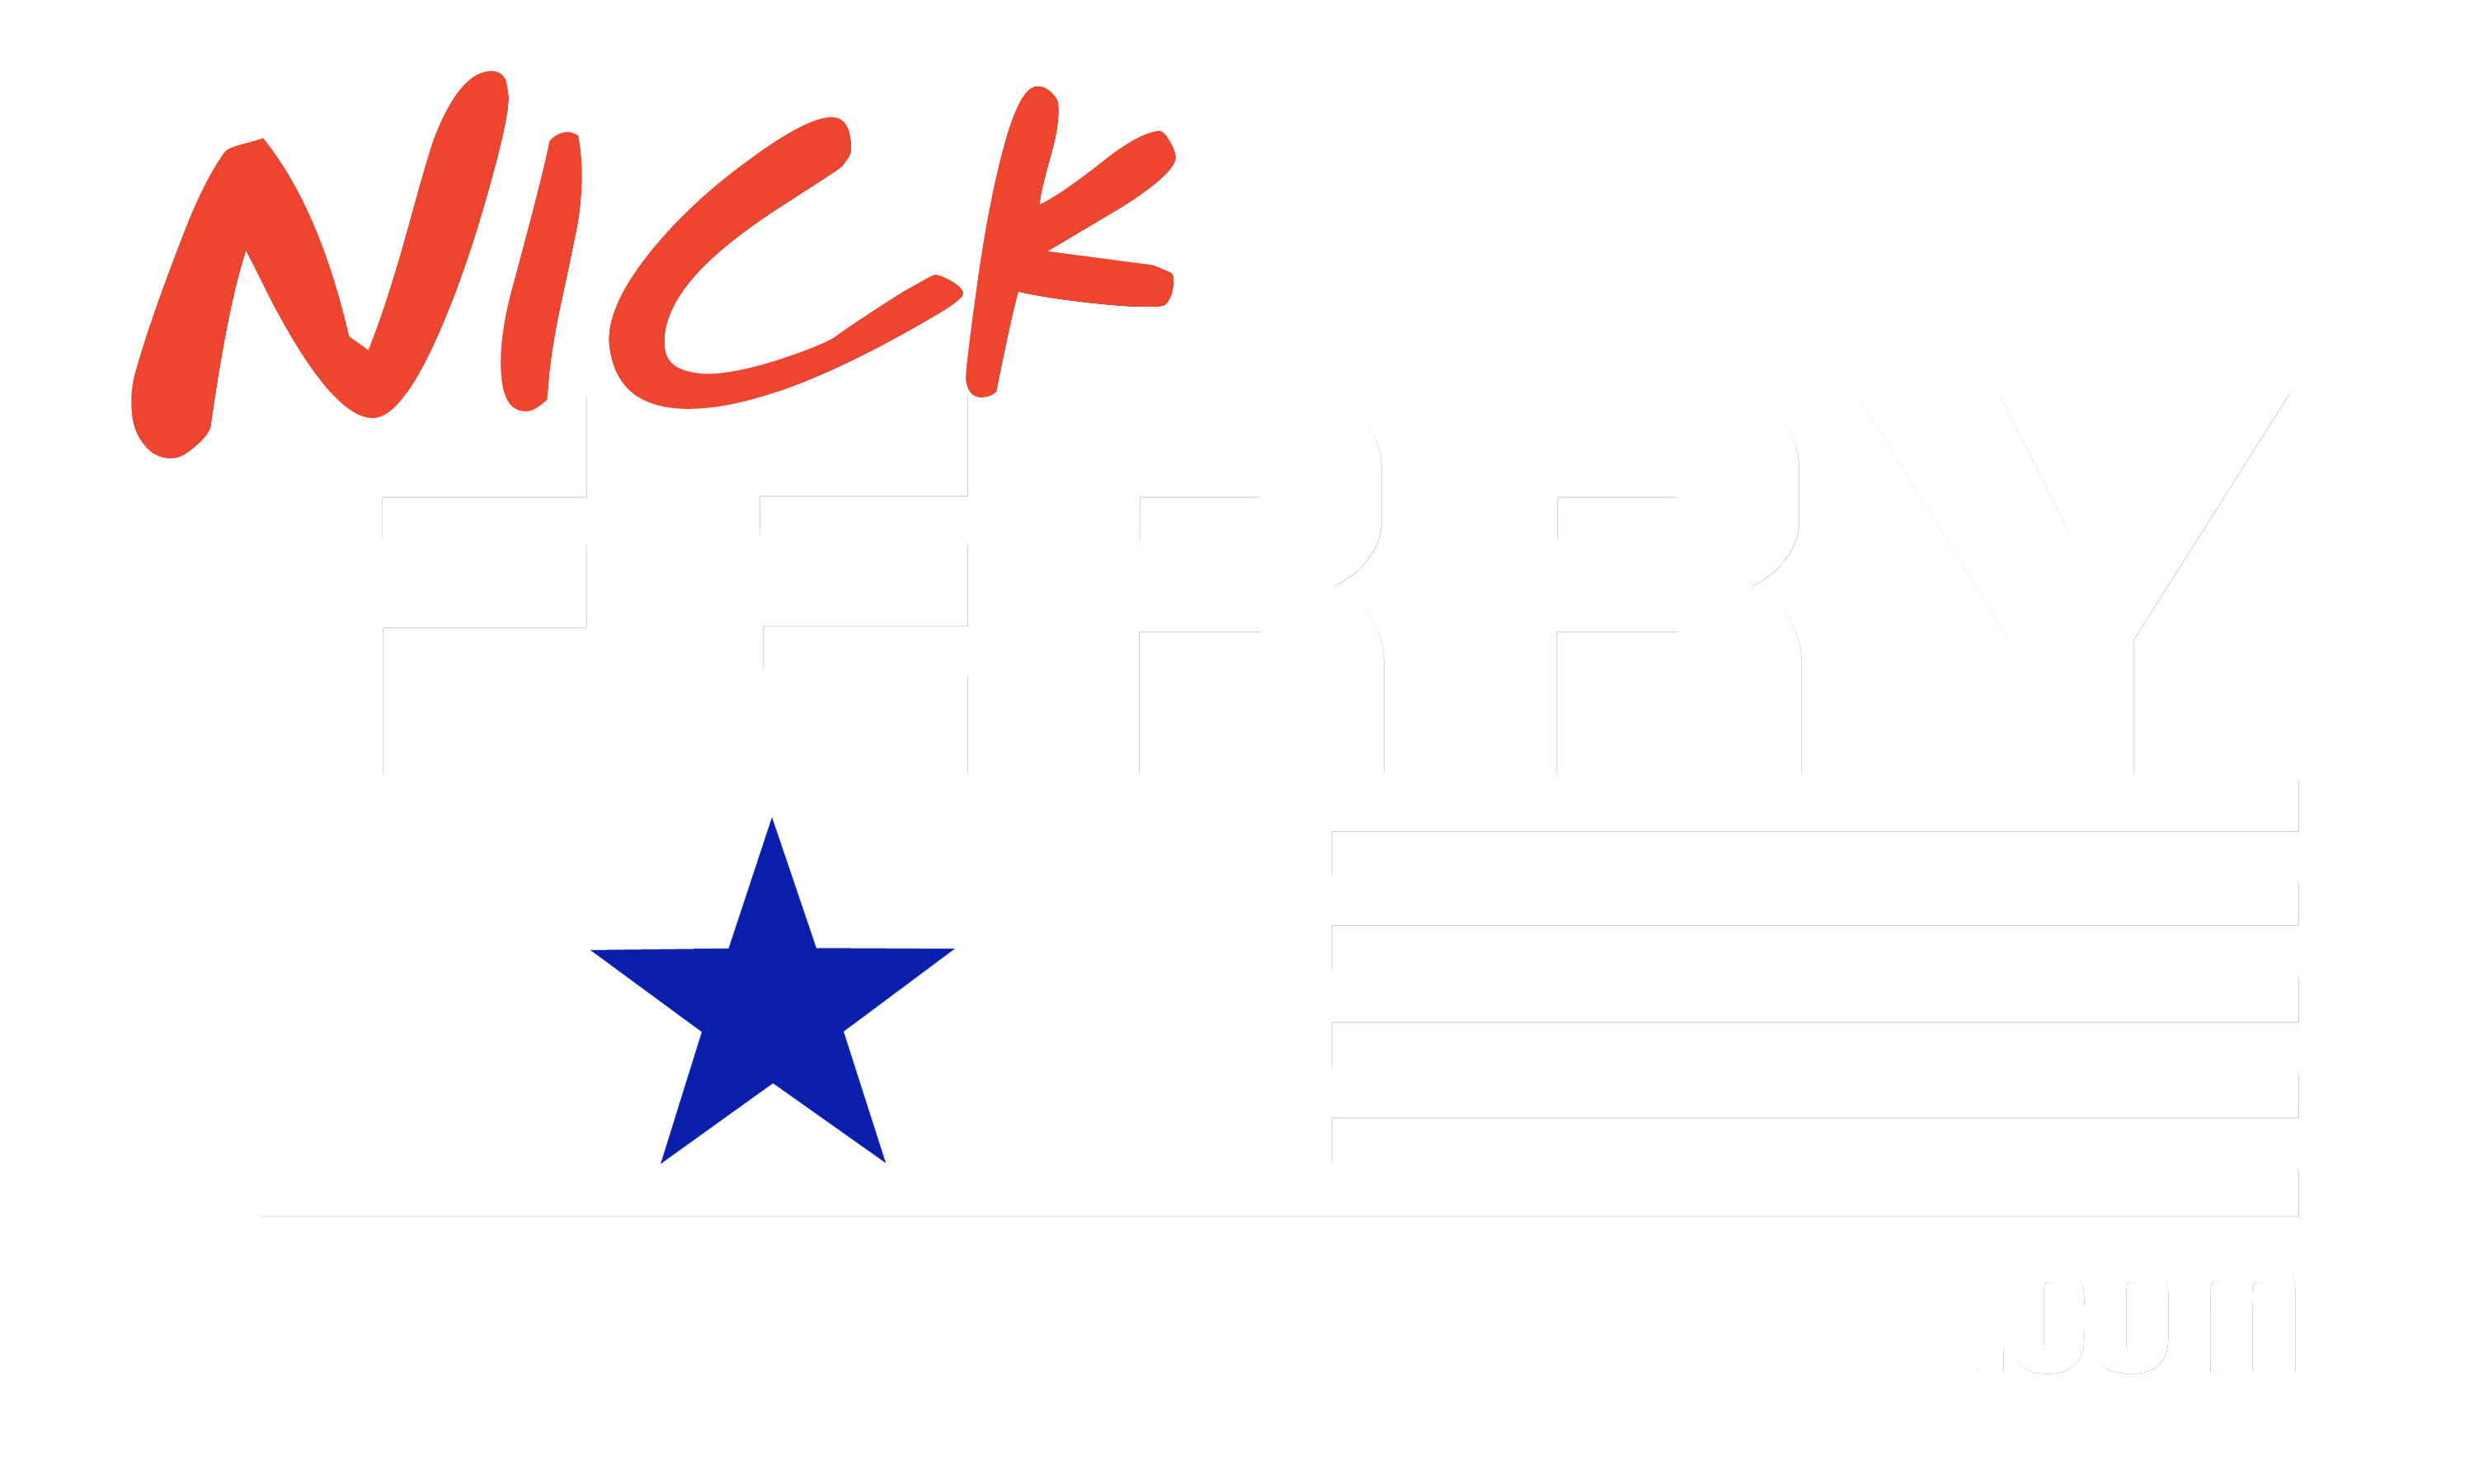 Nick Ferry